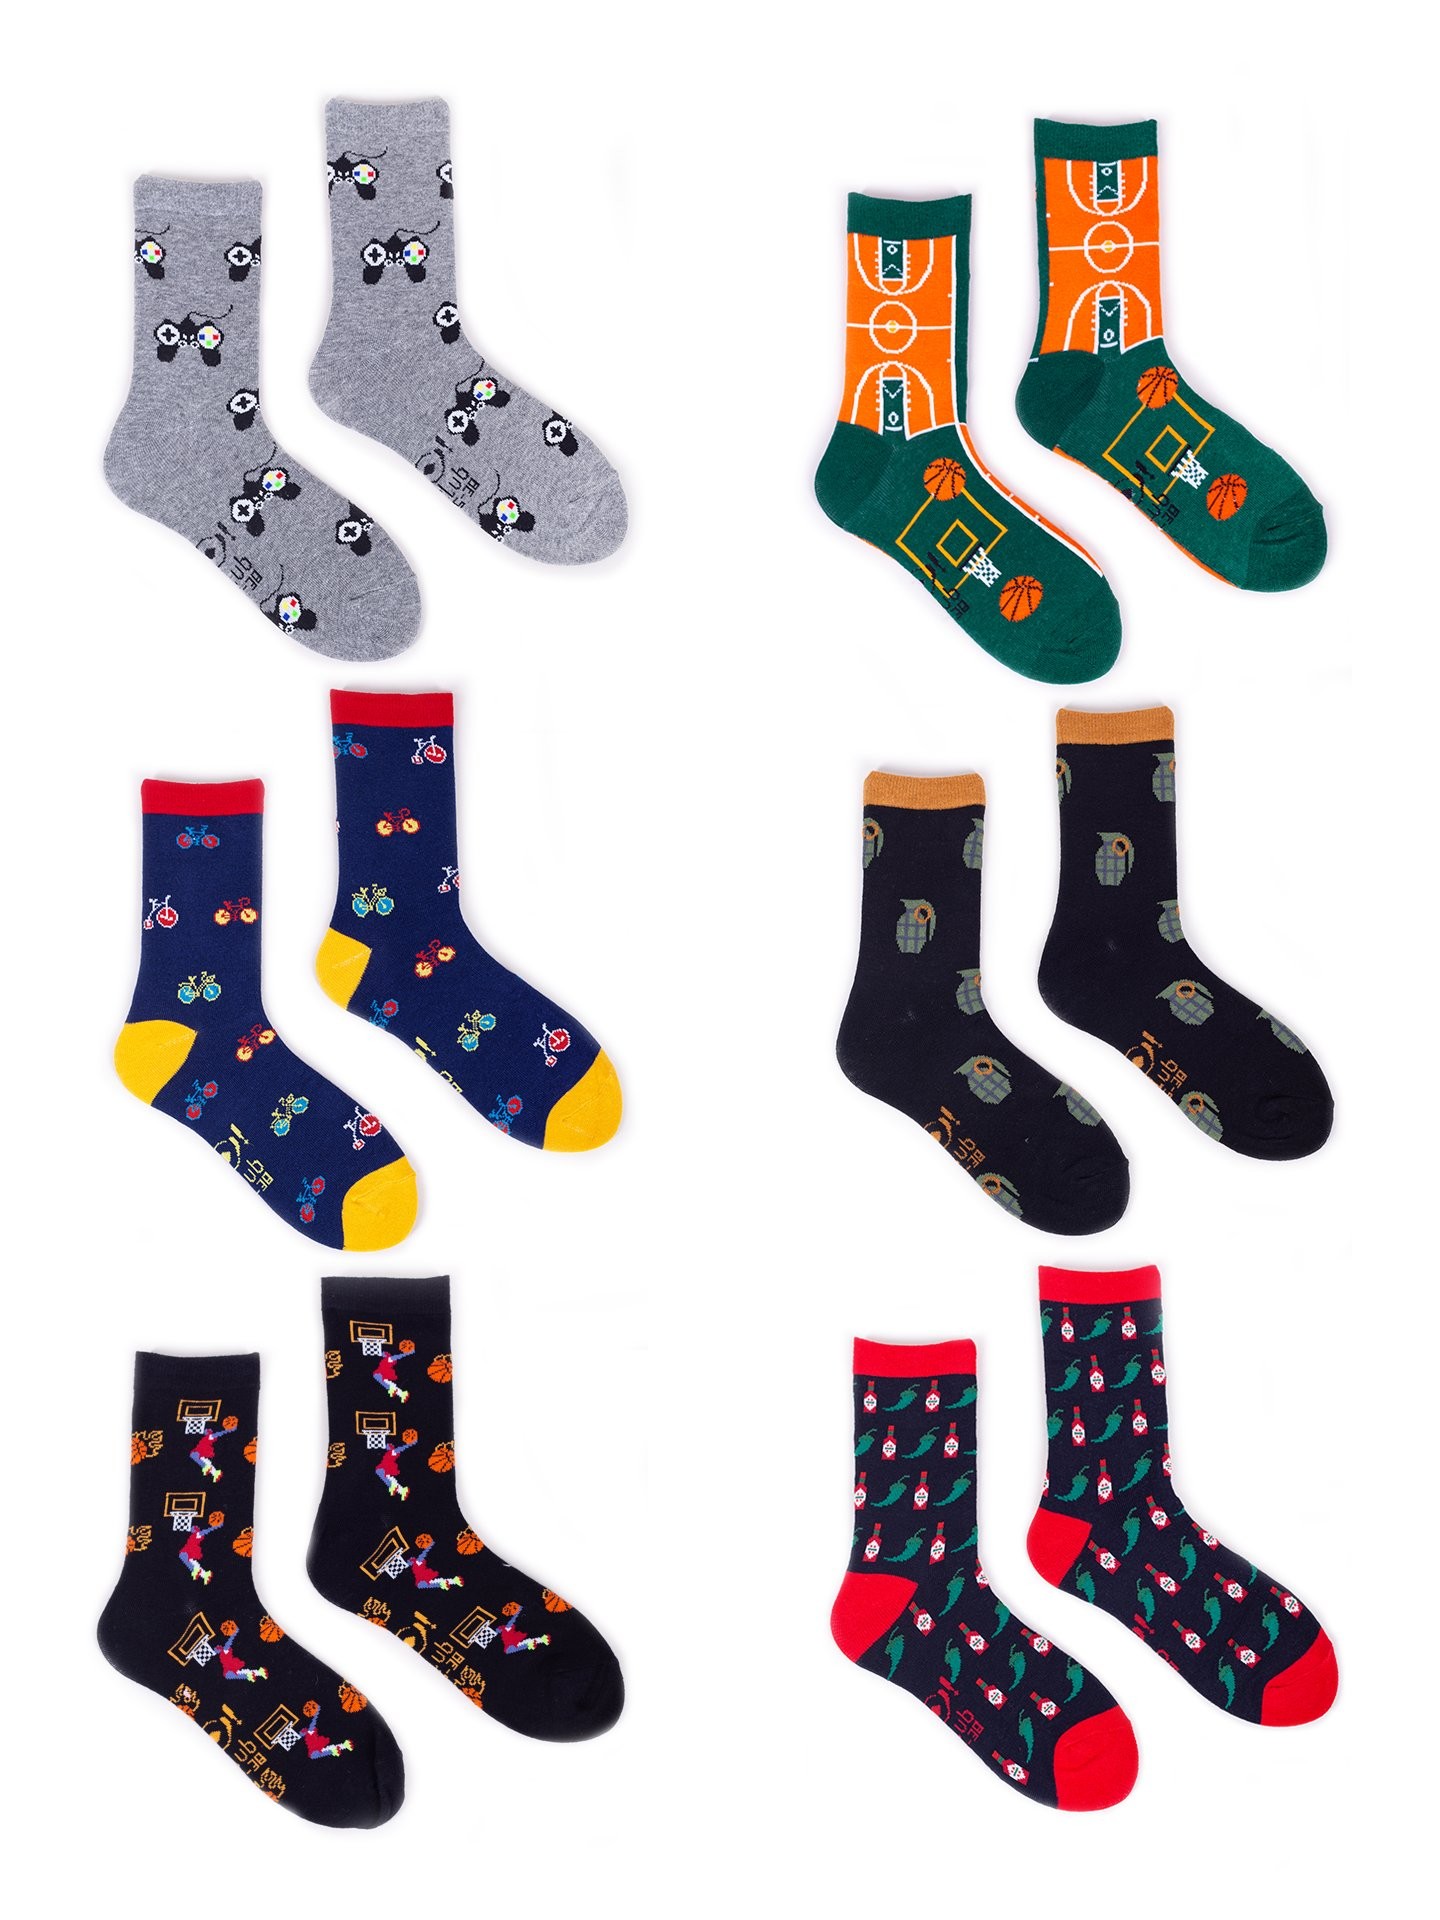 Yoclub Kids's Boys' Cotton Socks Patterns Colors 6-Pack SKA-0006C-AA00-004